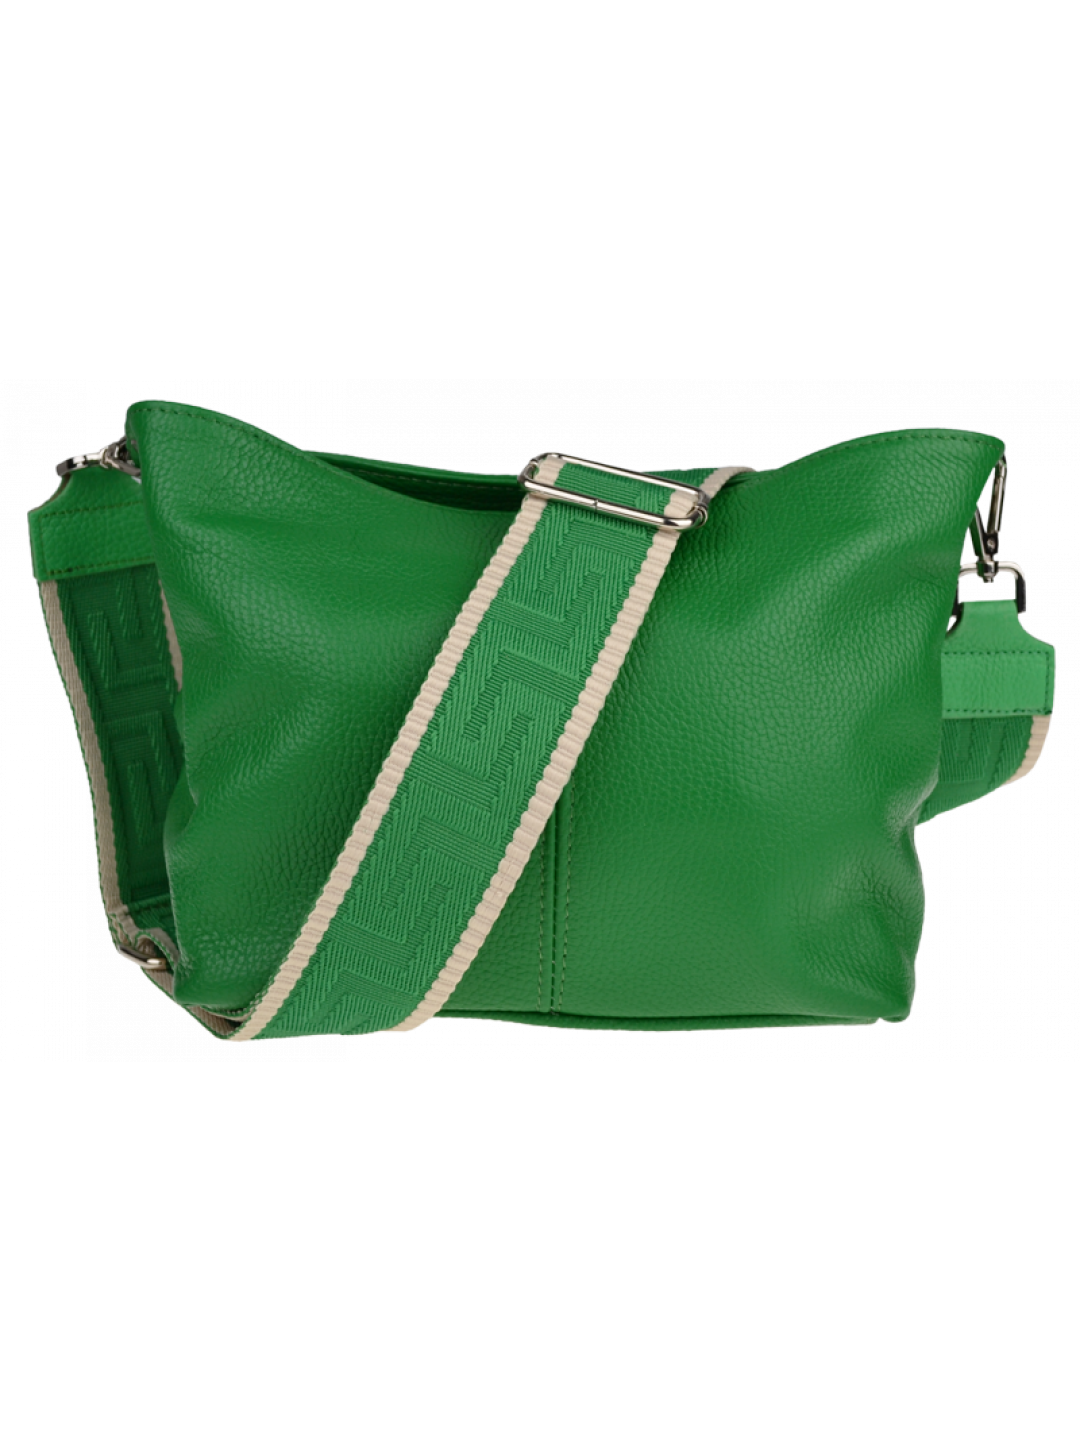 Kožená zelená kabelka Batilda Verde